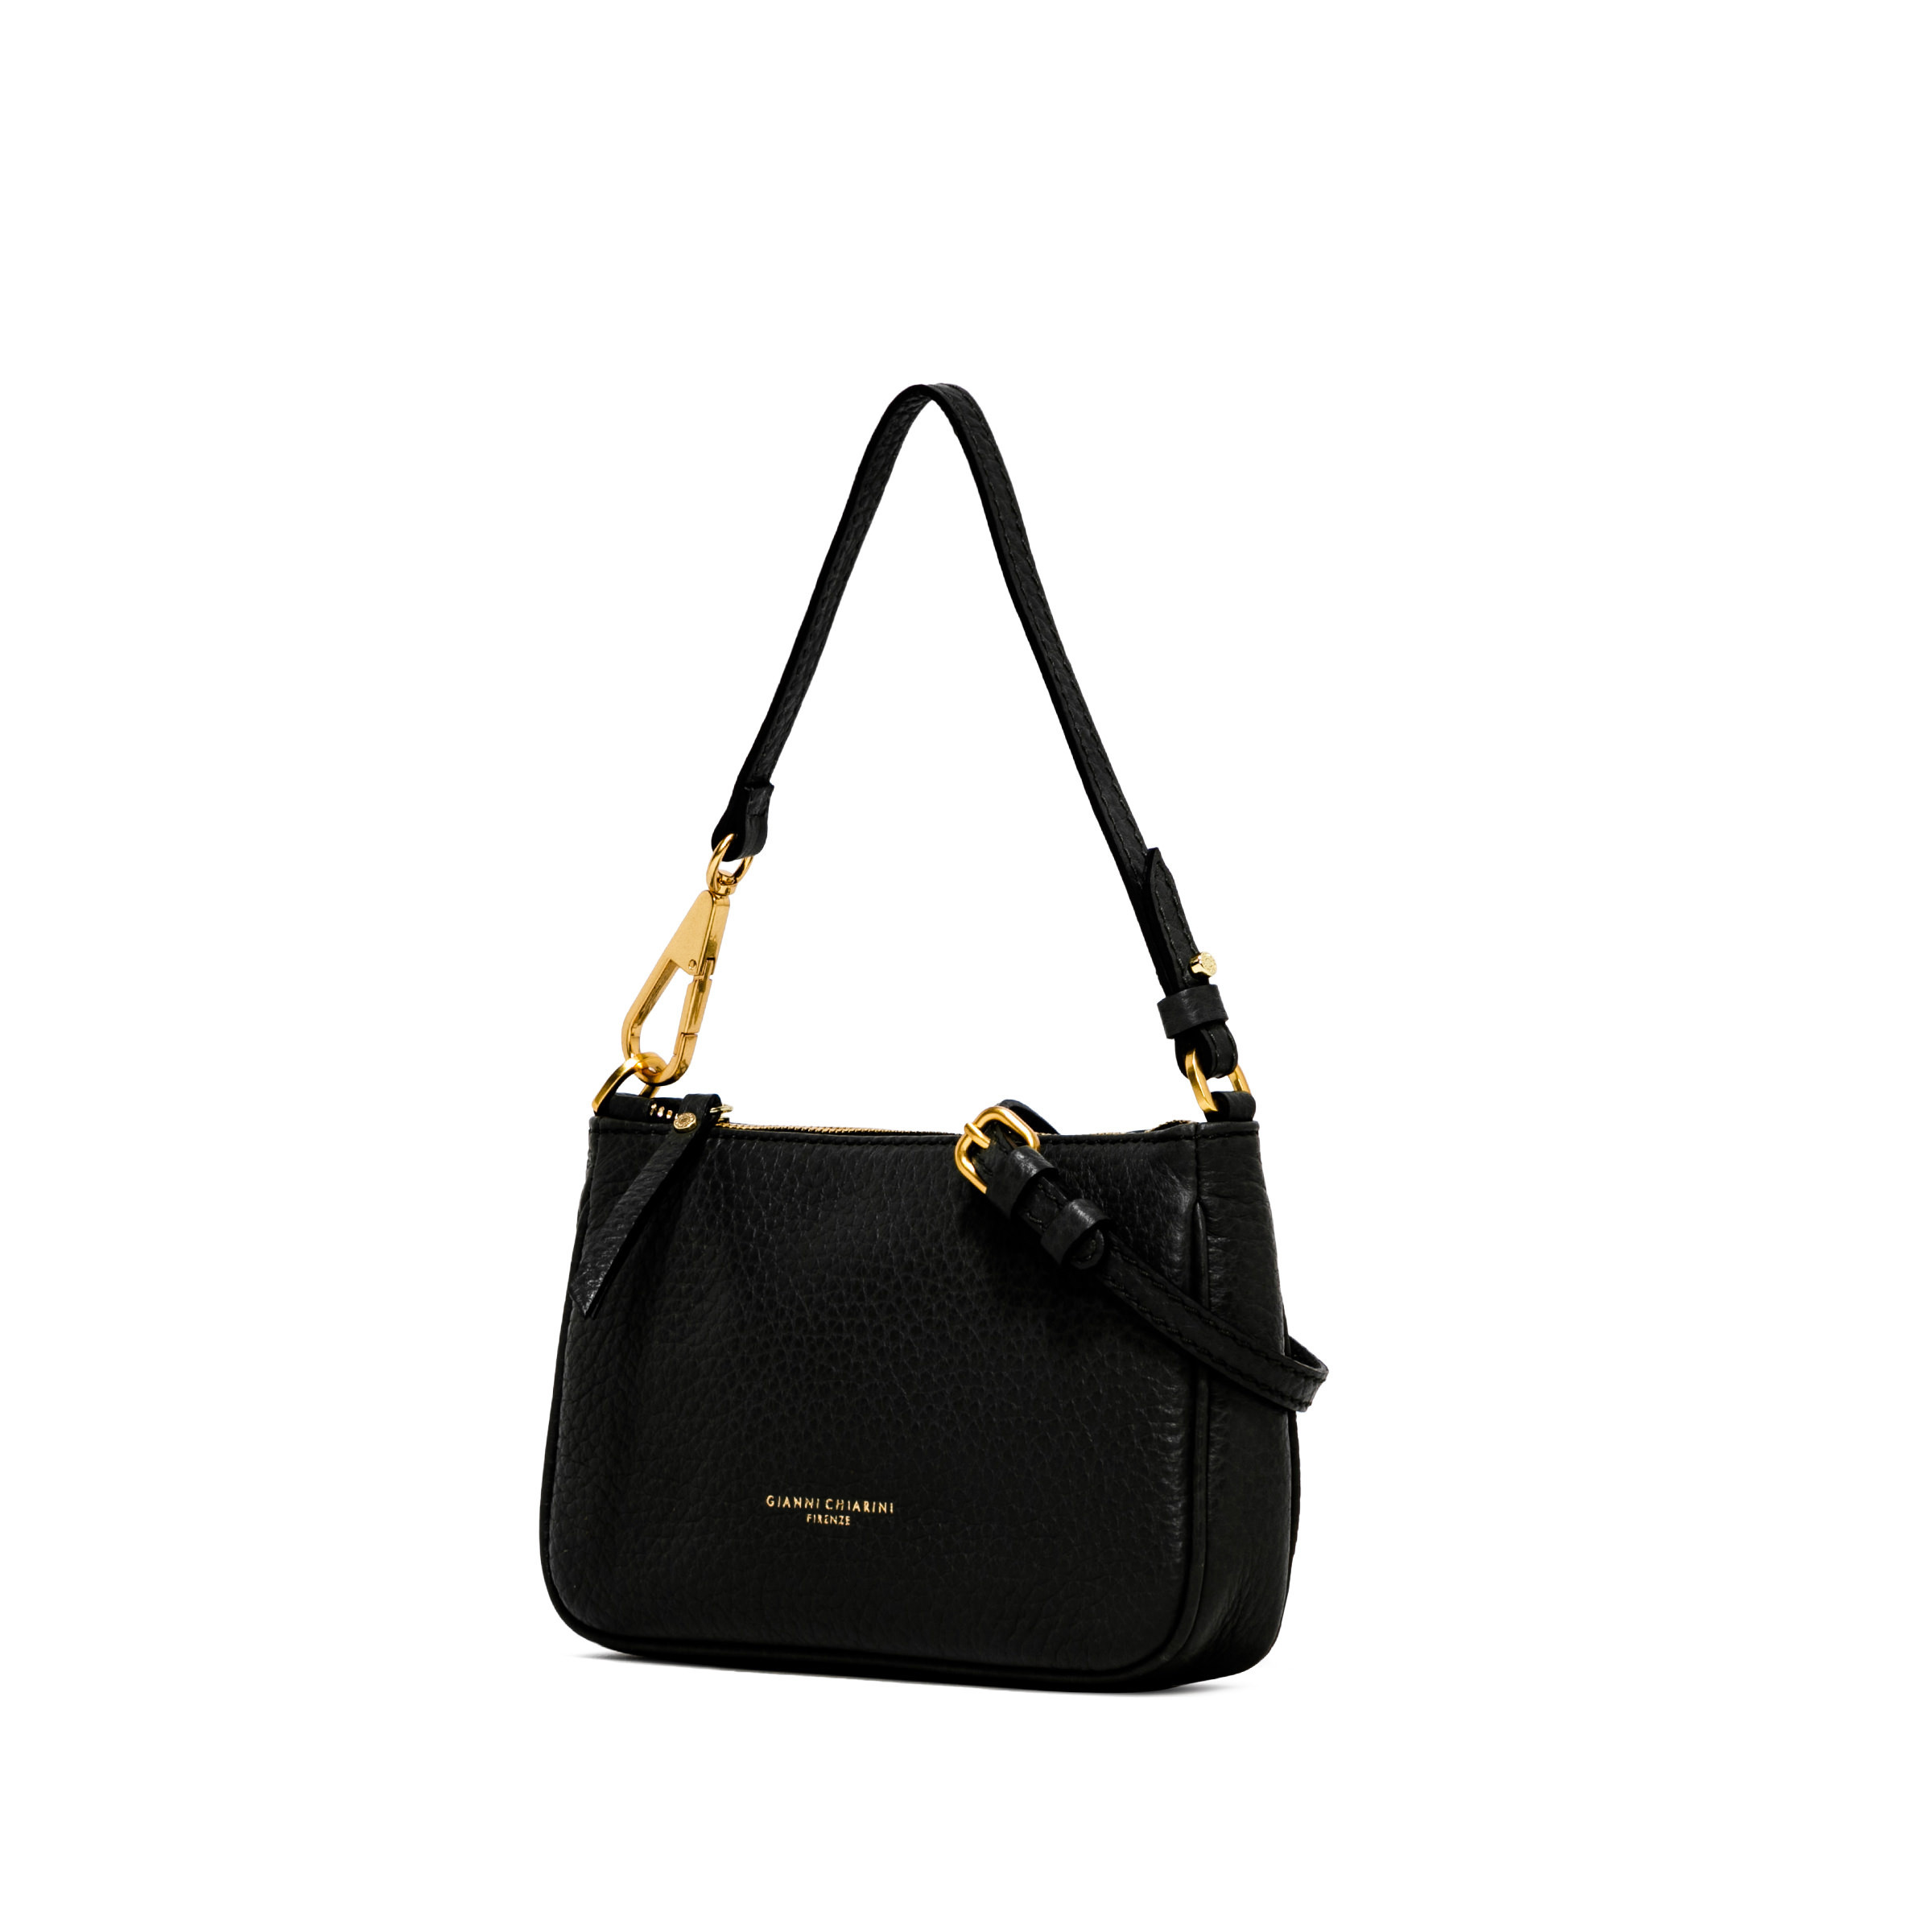 Gianni Chiarini - Brooke bag in leather, Black, large image number 1